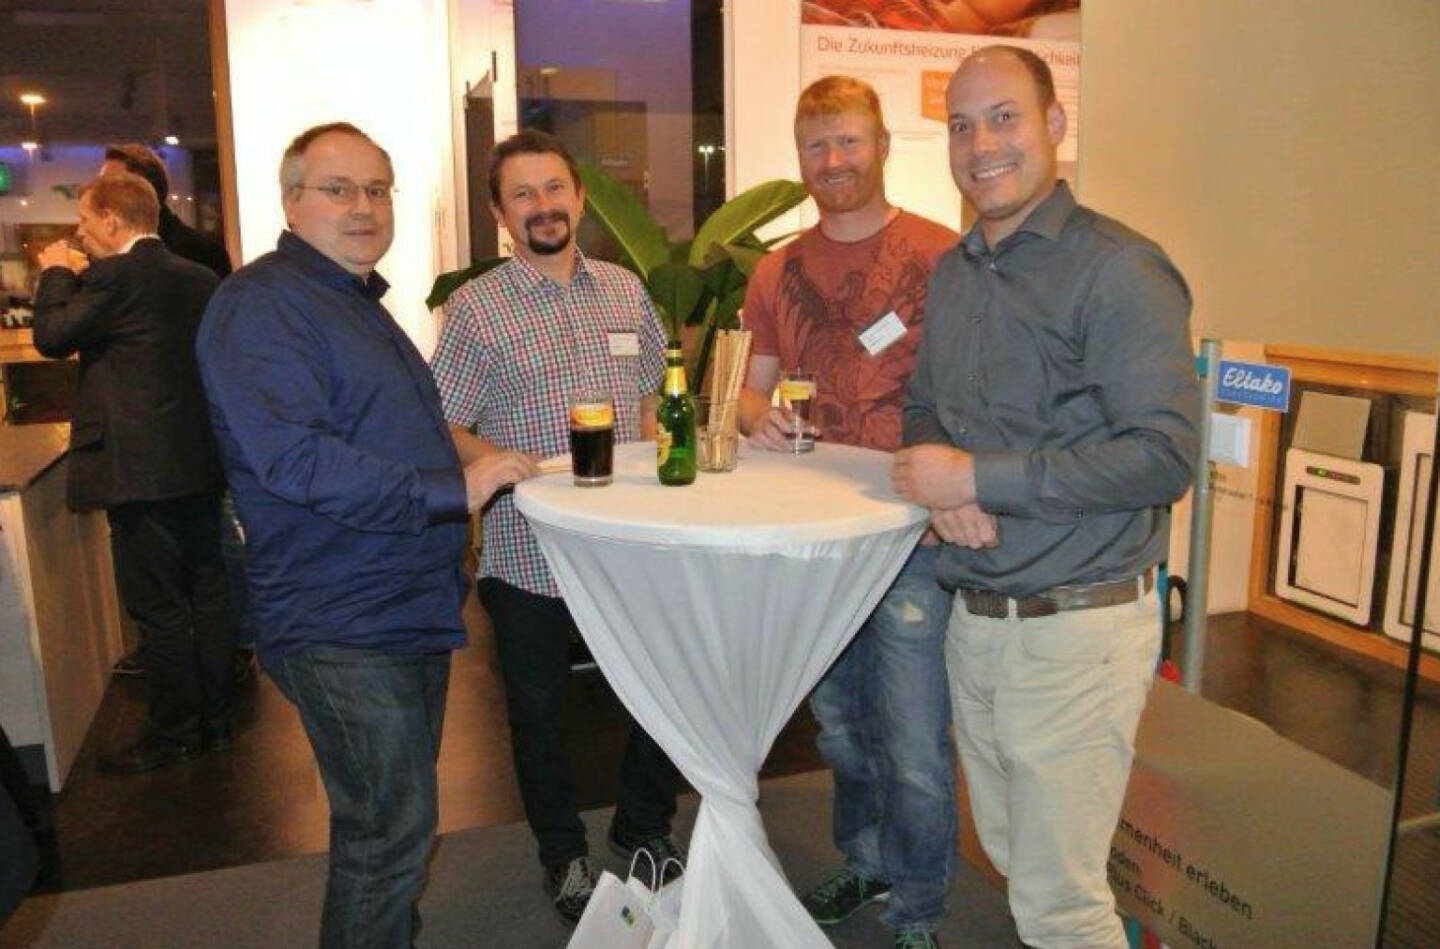 Franz Wolflehner, Josef Bertl und Andreas Kraus Stora Enso
Wood Products GmbH, Patrick Zehethofer Cleen Energy
